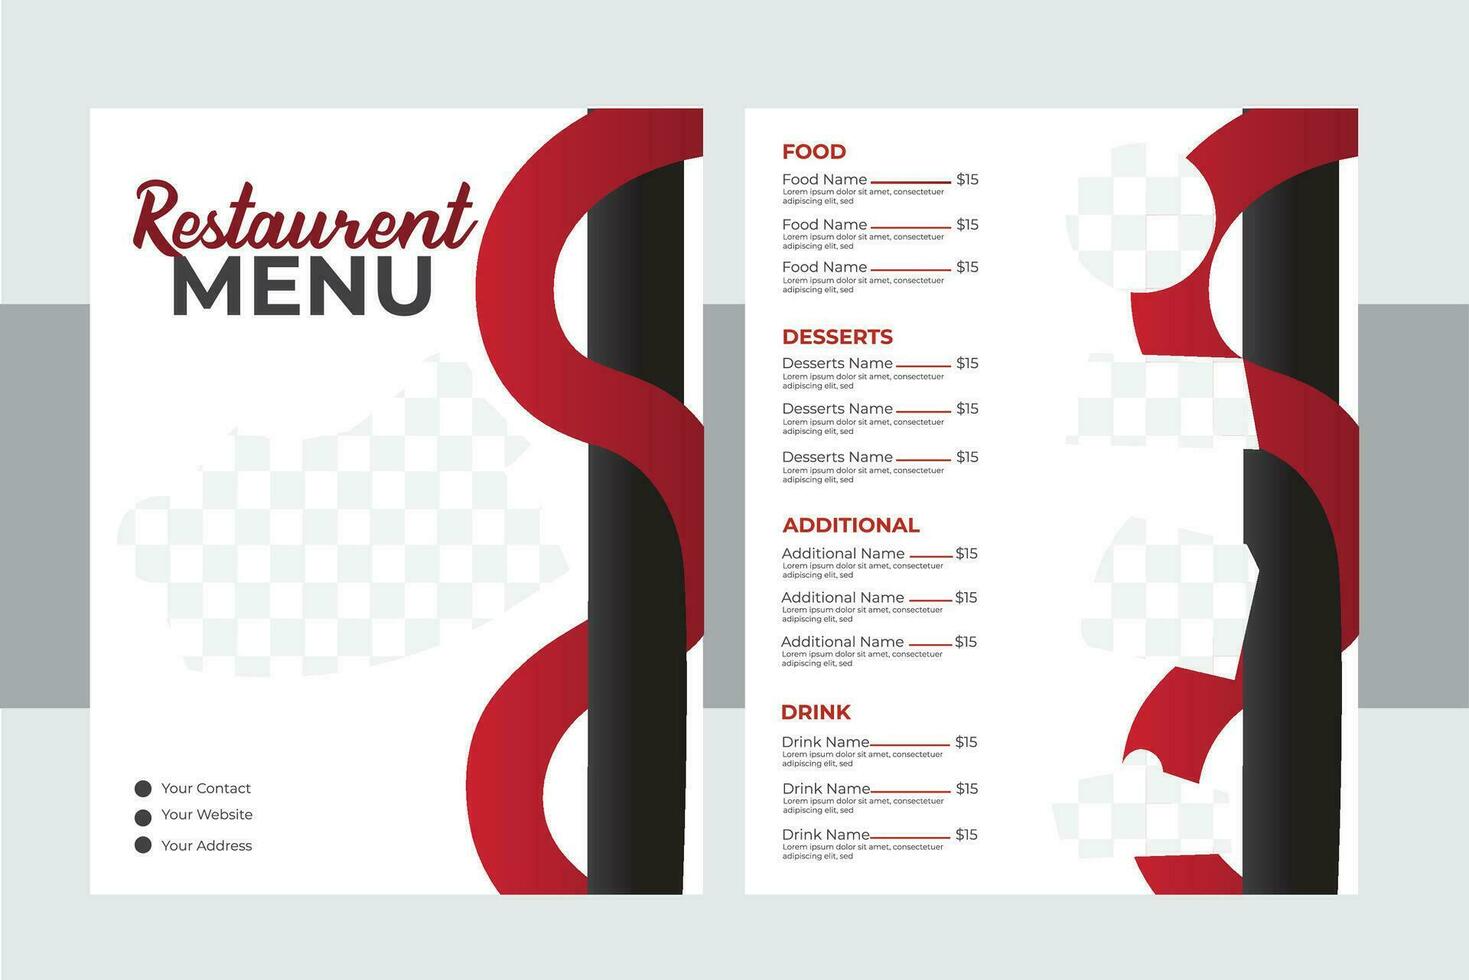 modern restaurant menu kaart ontwerp sjabloon vector